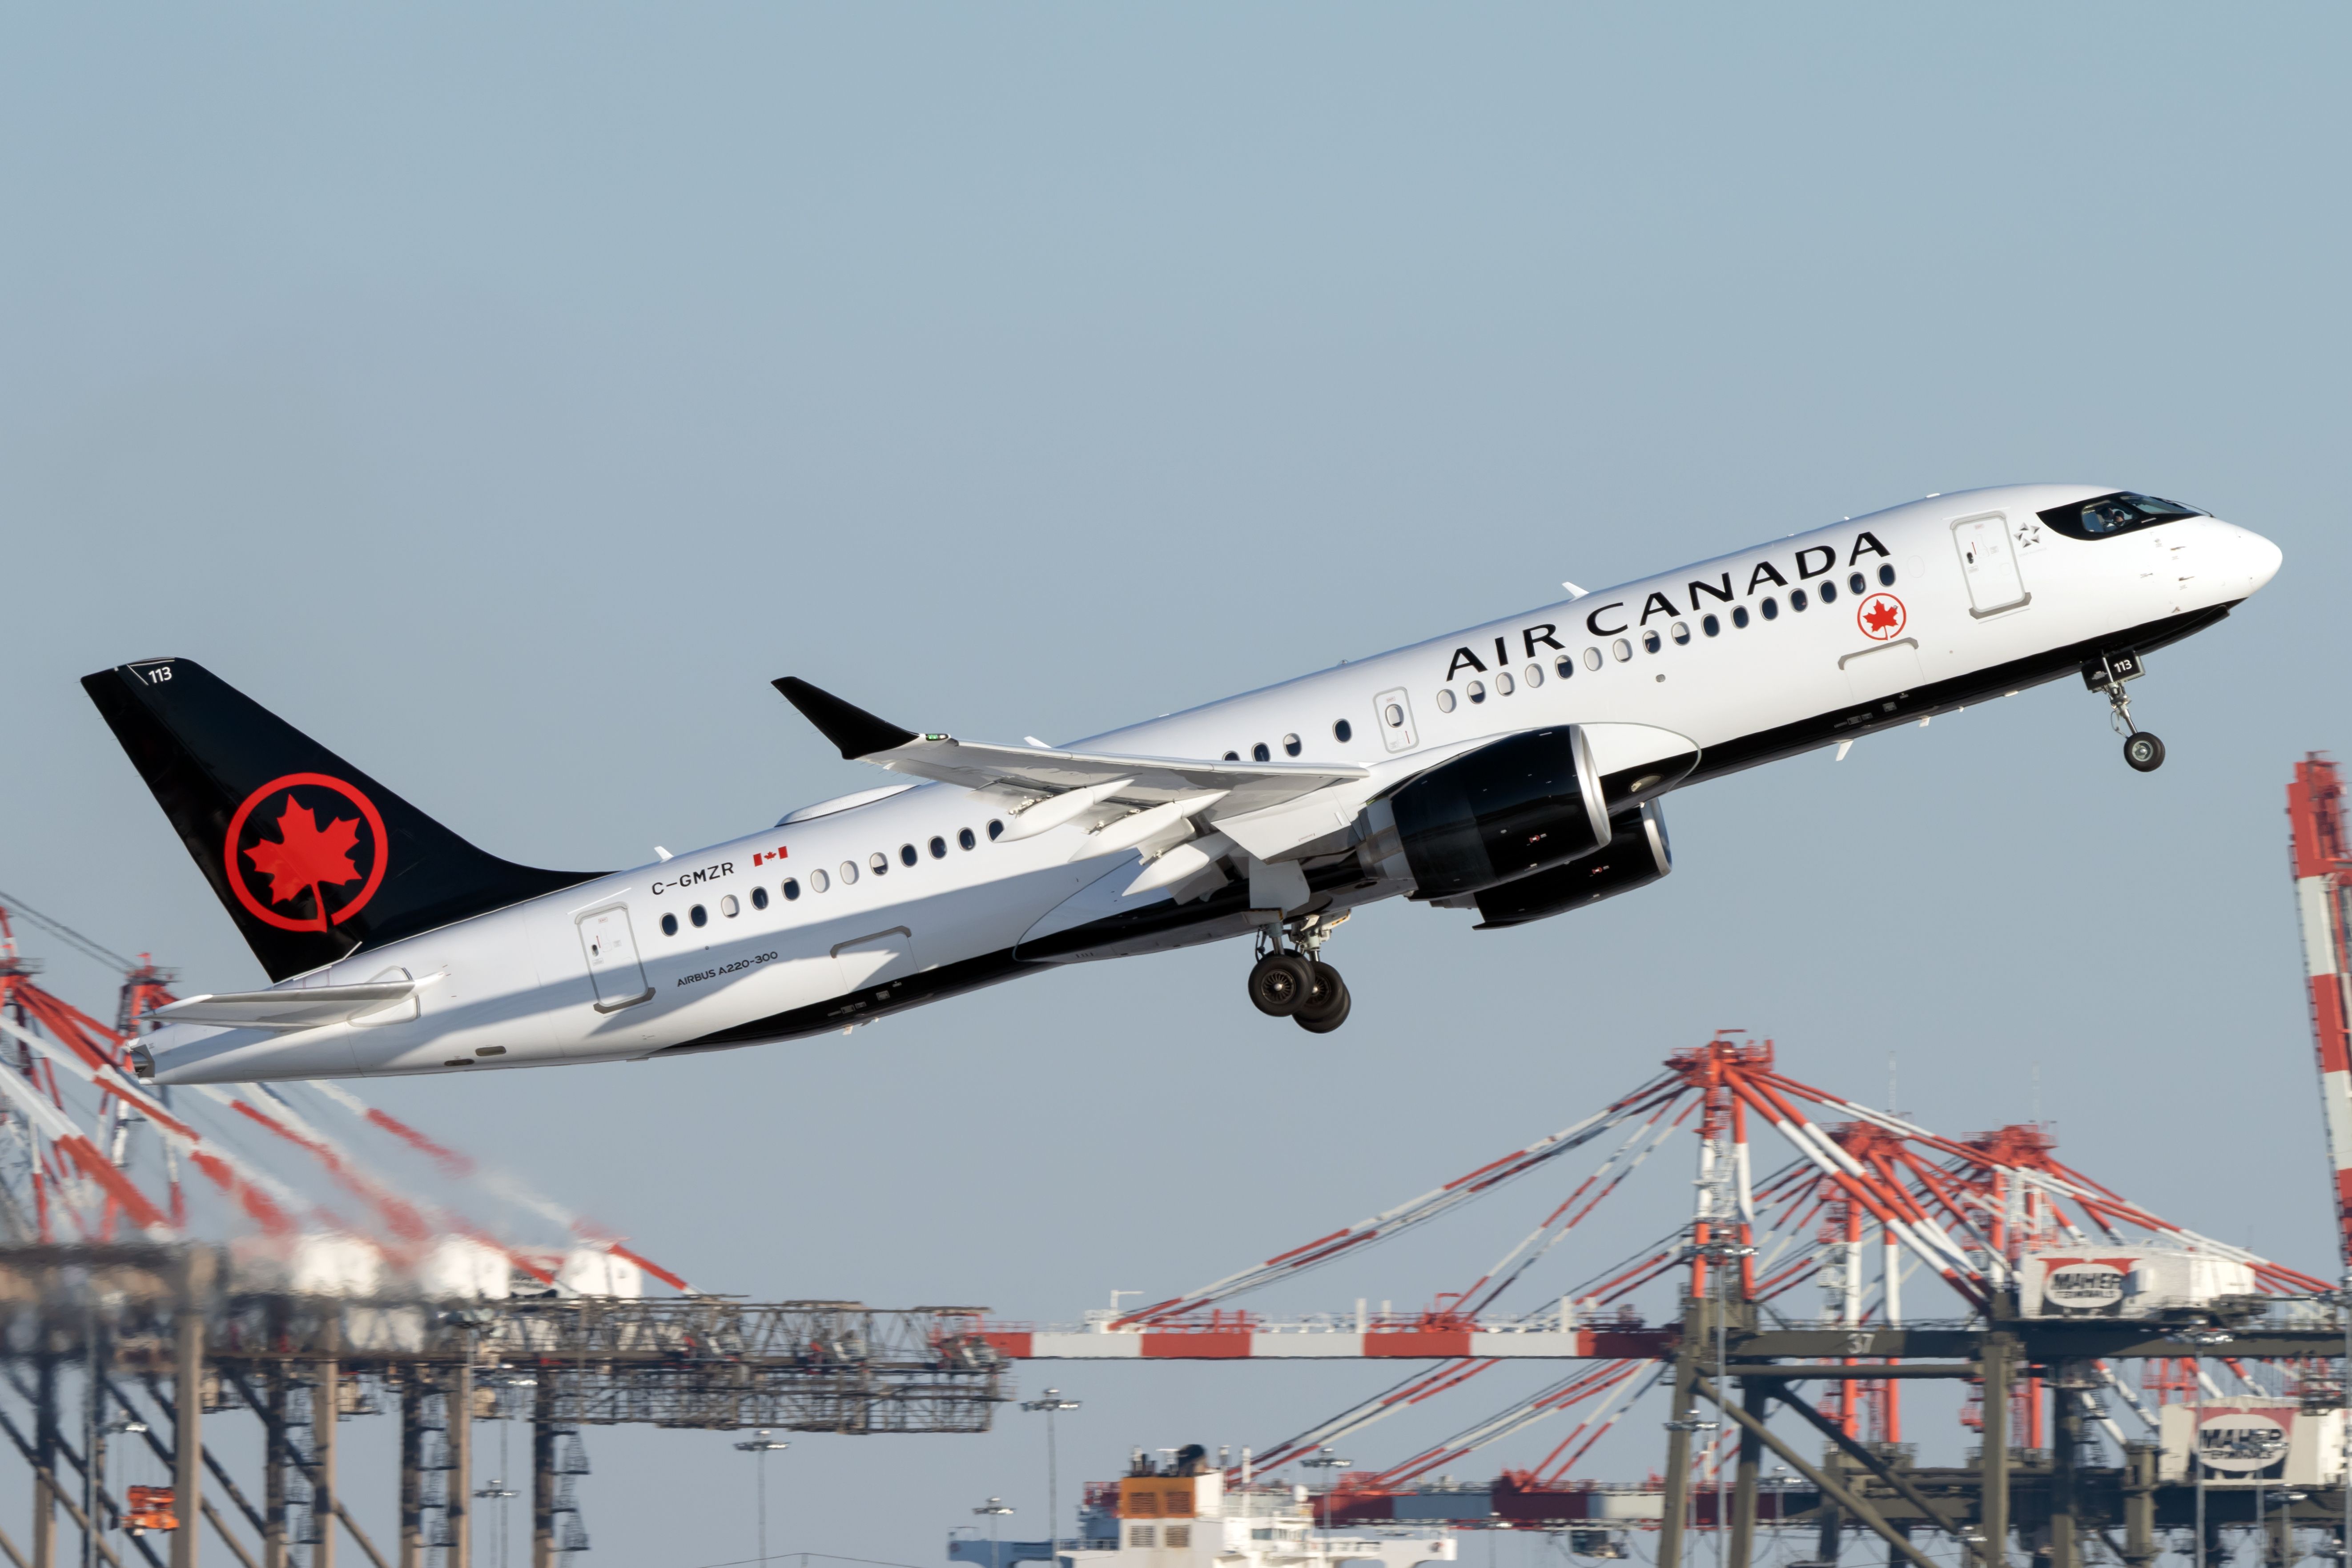 Air Canada Airbus A220-300 taking off